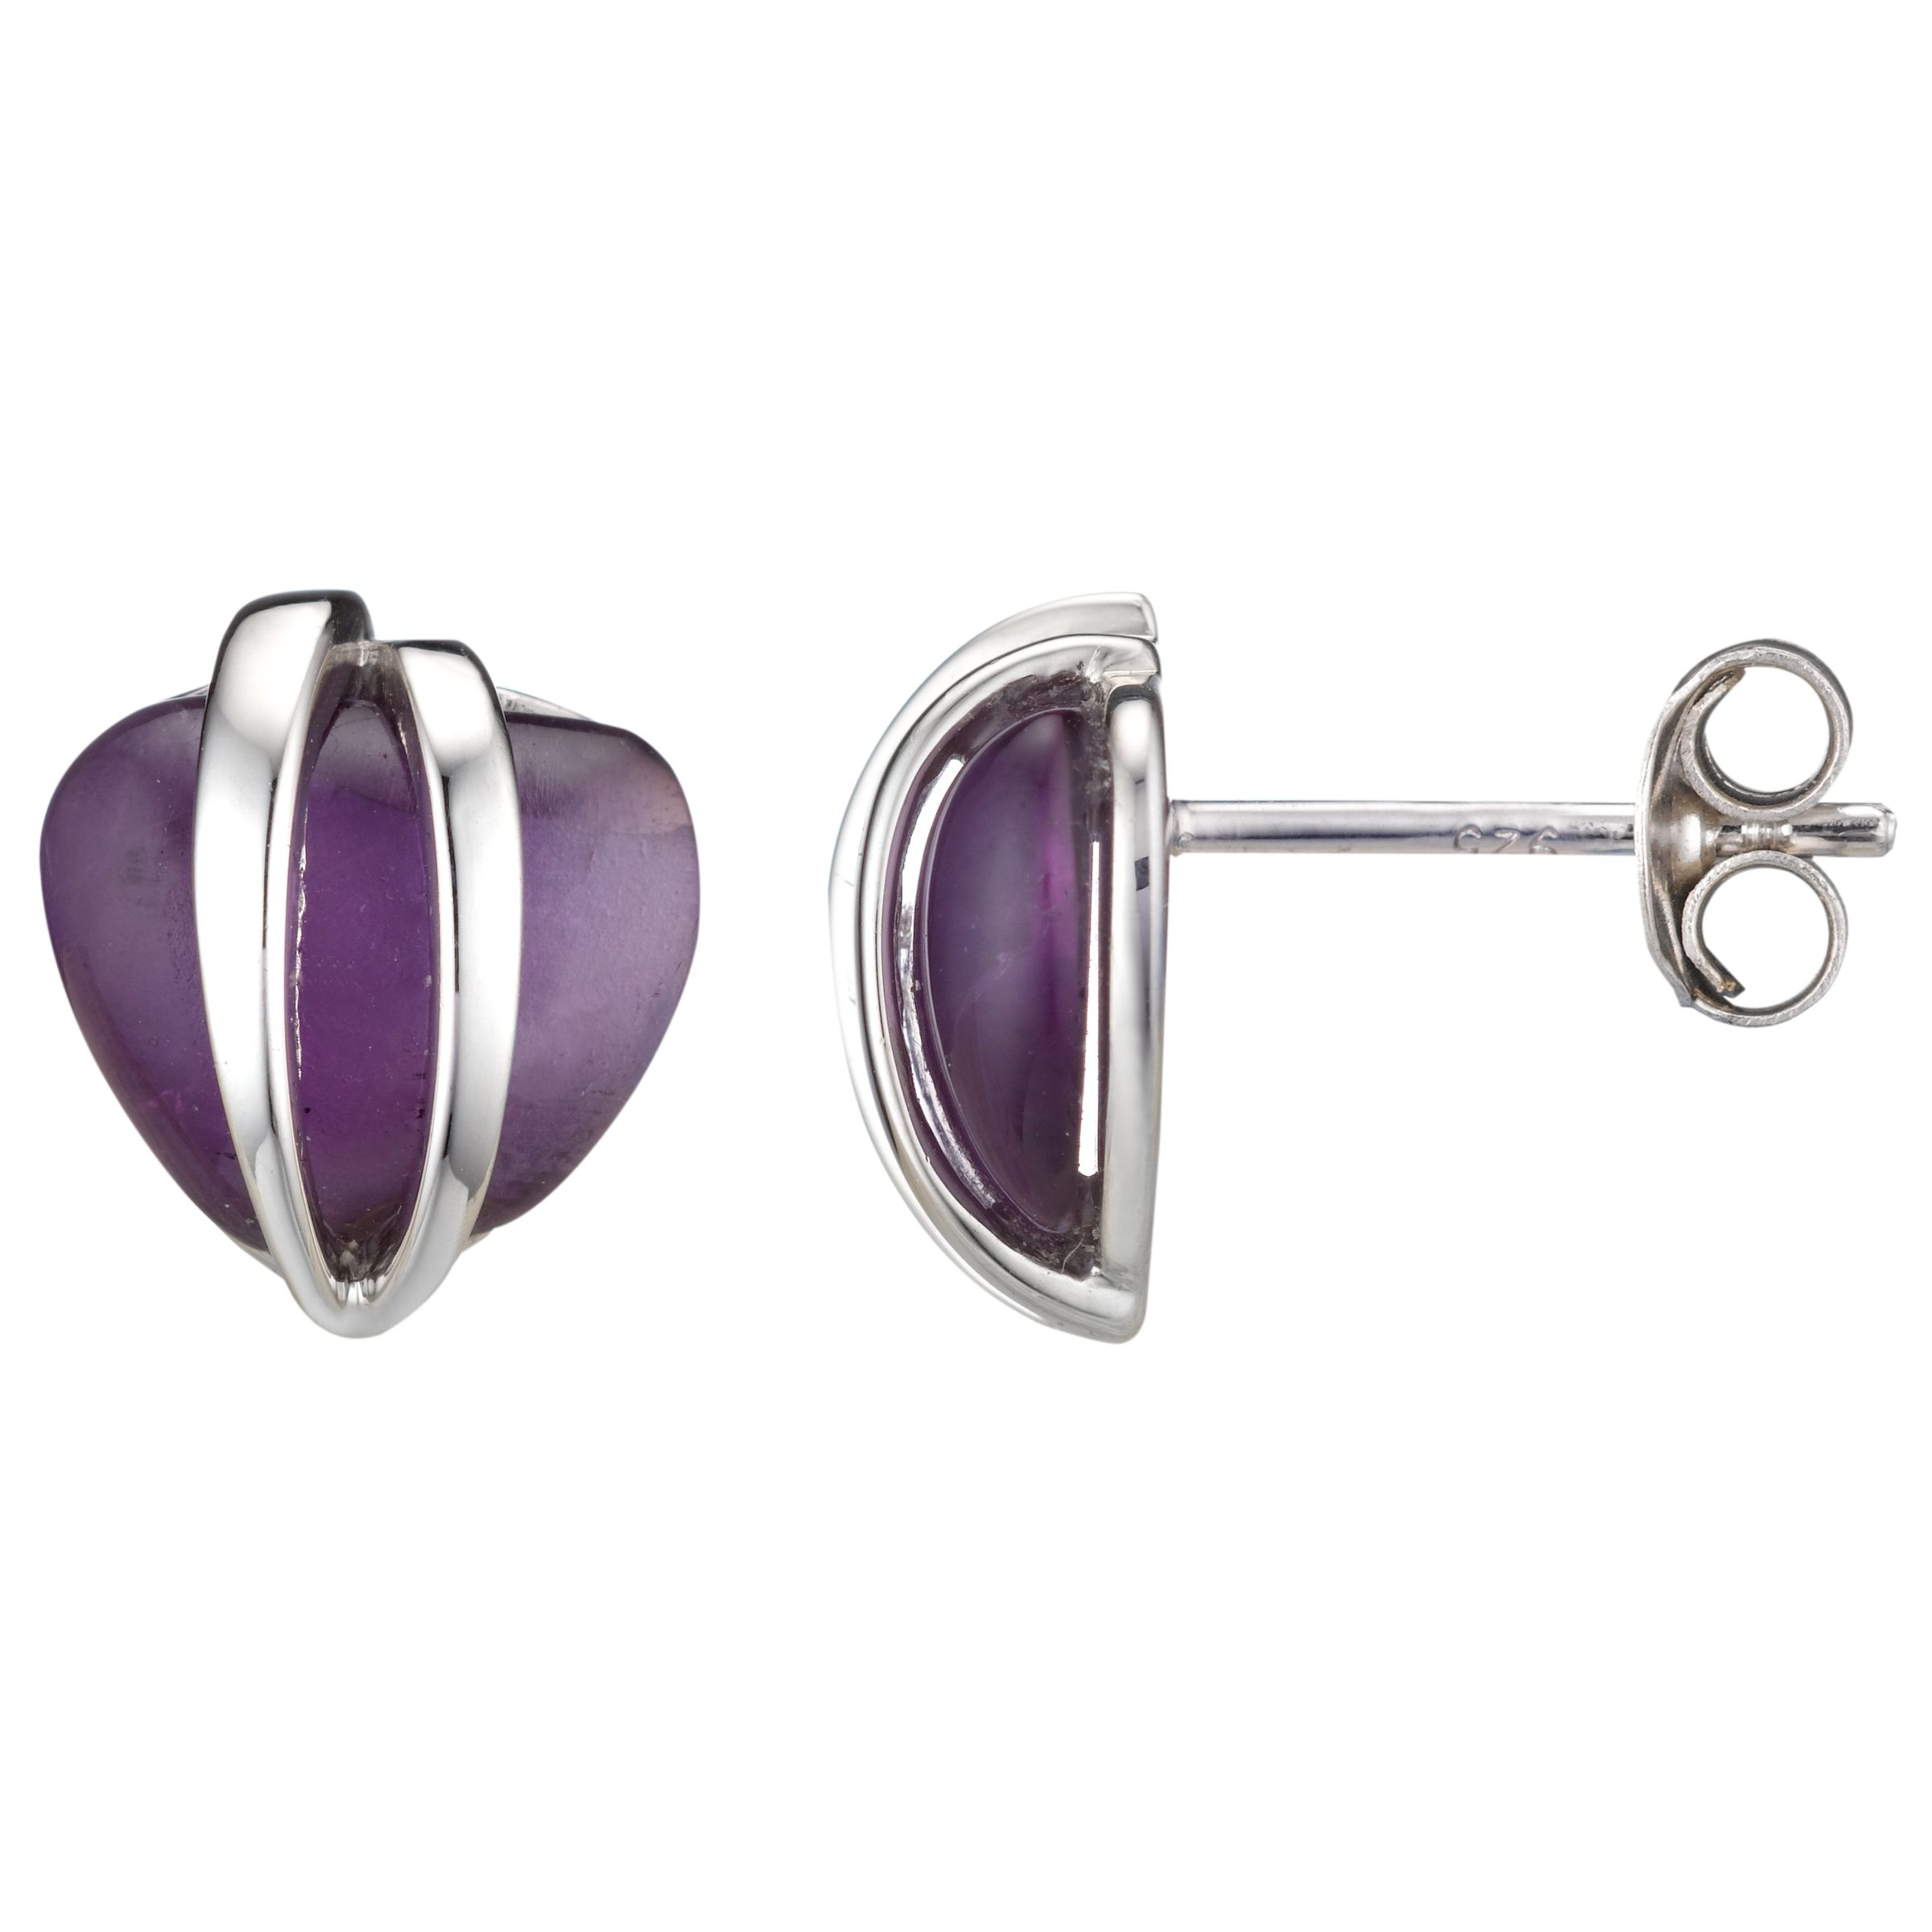 A B Davis Polished Sterling Silver Caged Heart Stud Earrings, Amethyst